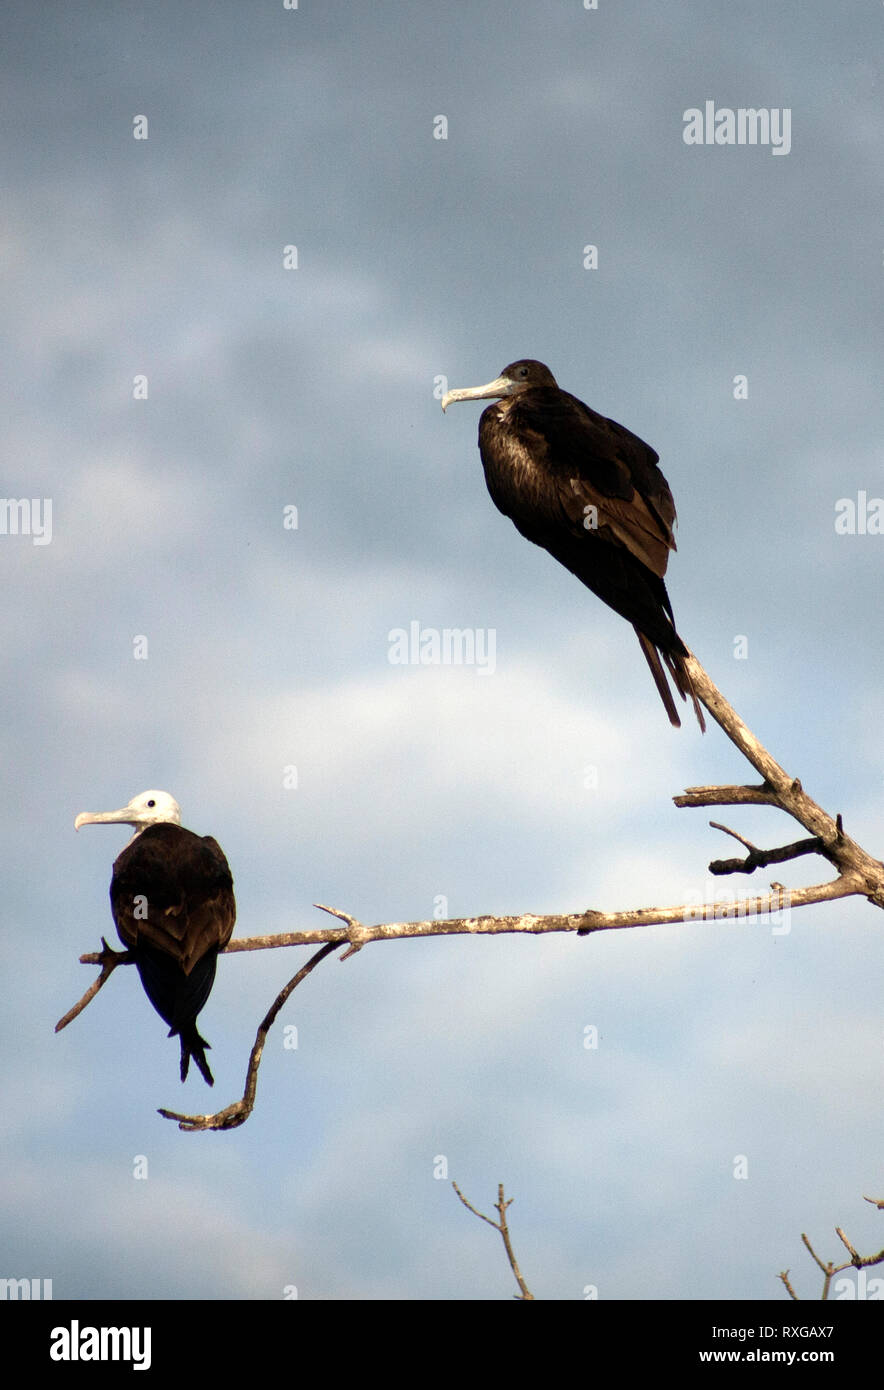 A couple of birds perch on a tree branch in Yucatan, Mexico, June 21, 2009. Stock Photo